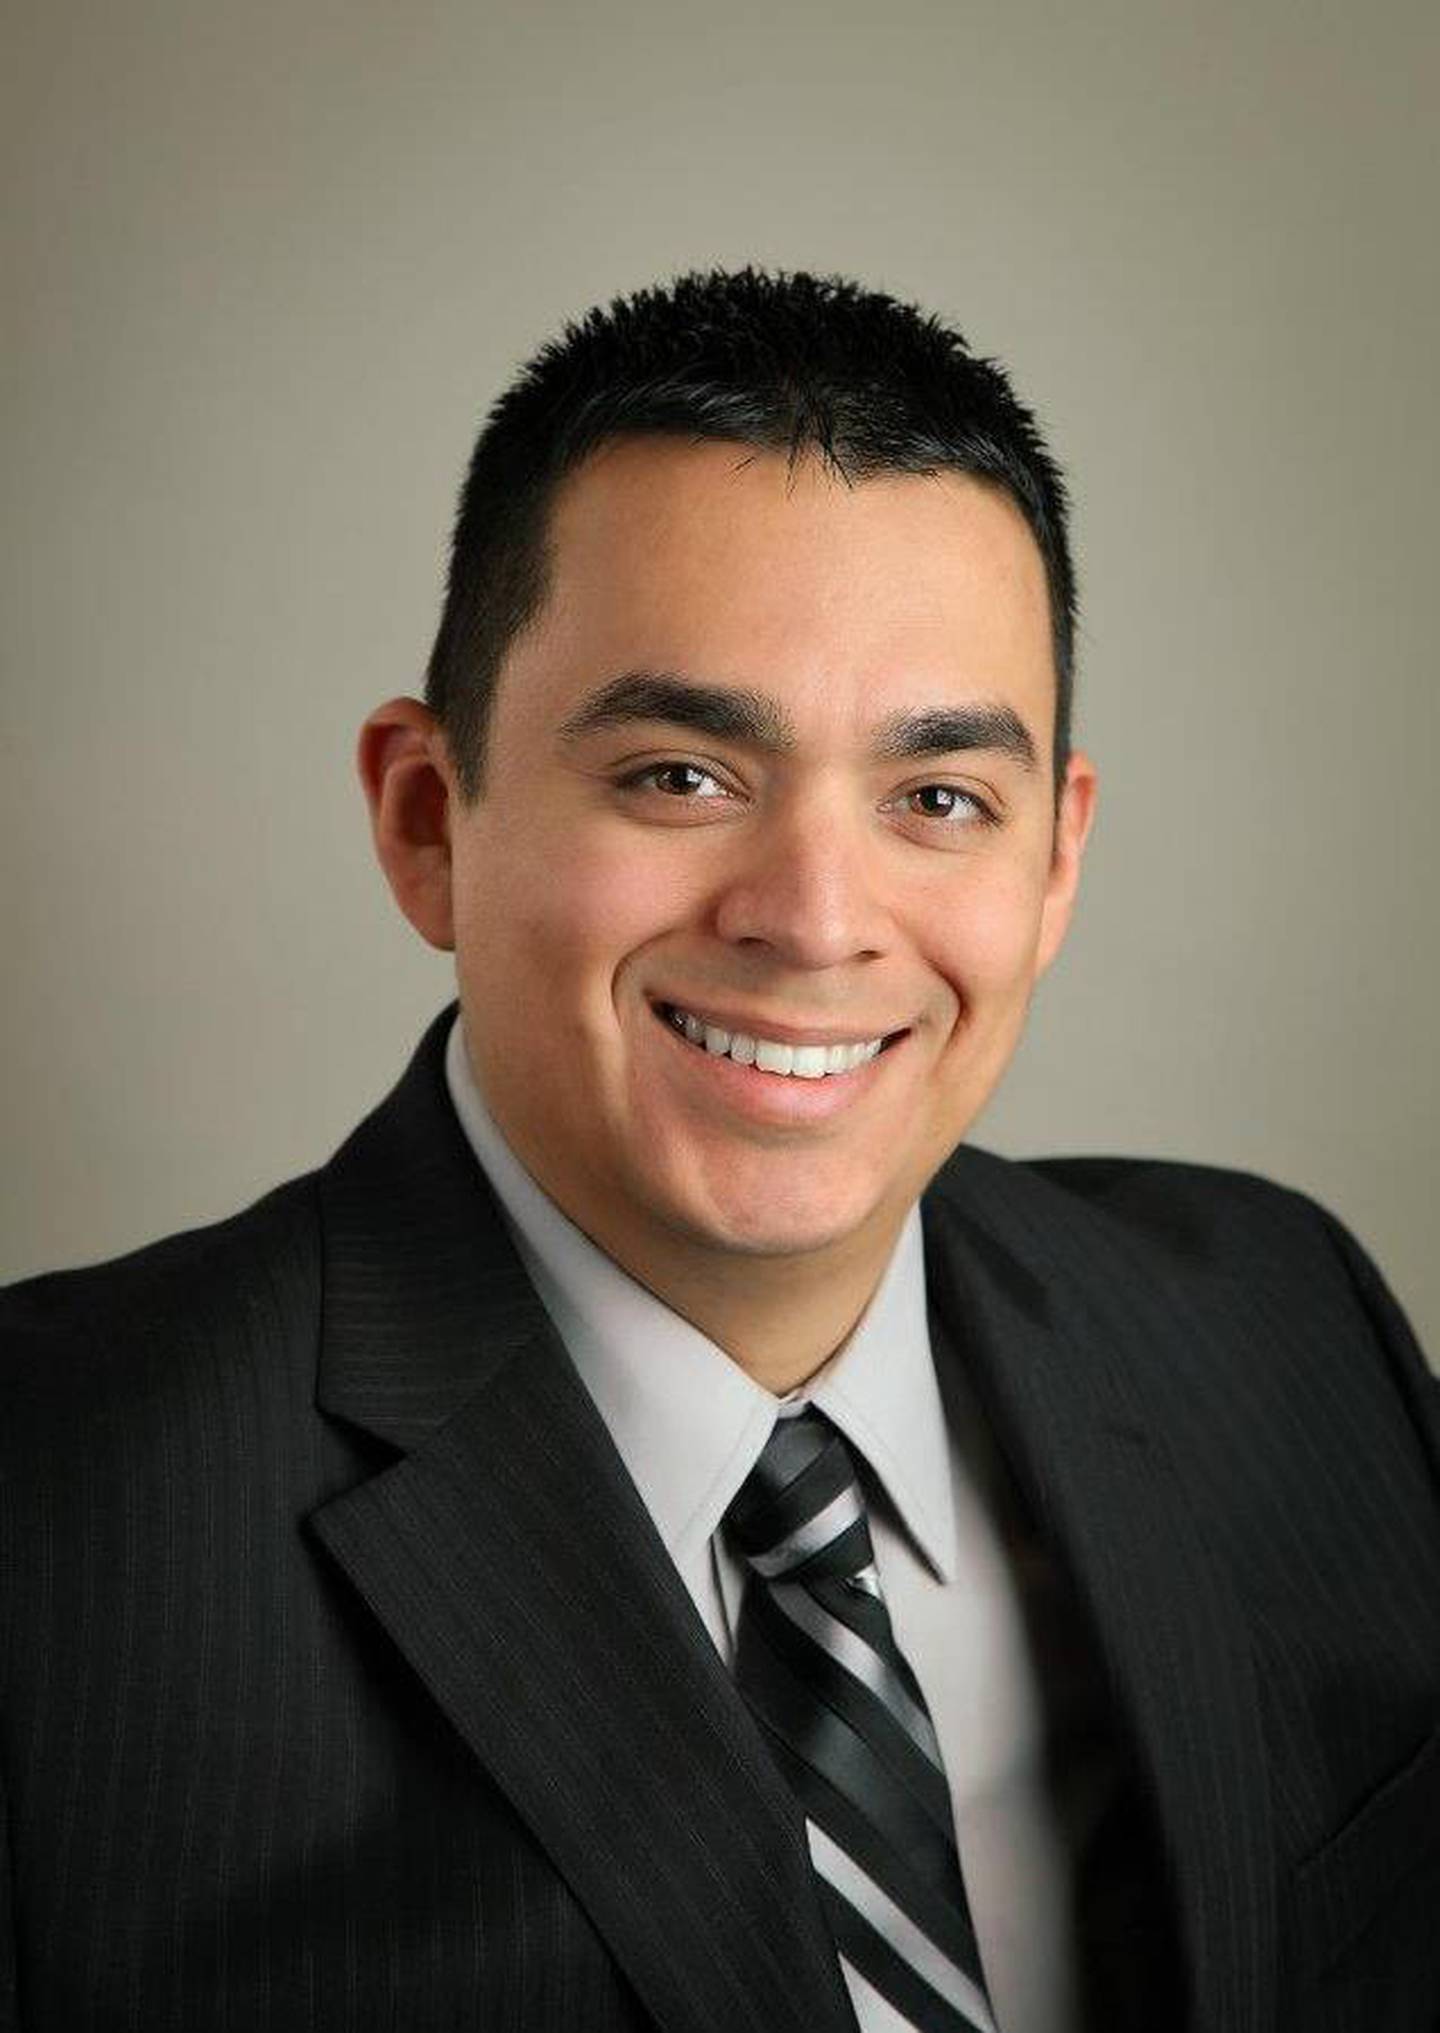 Liandro "Li" Arellano Jr. announced his candidacy for the Republican nomination for state representative in the 74th District.